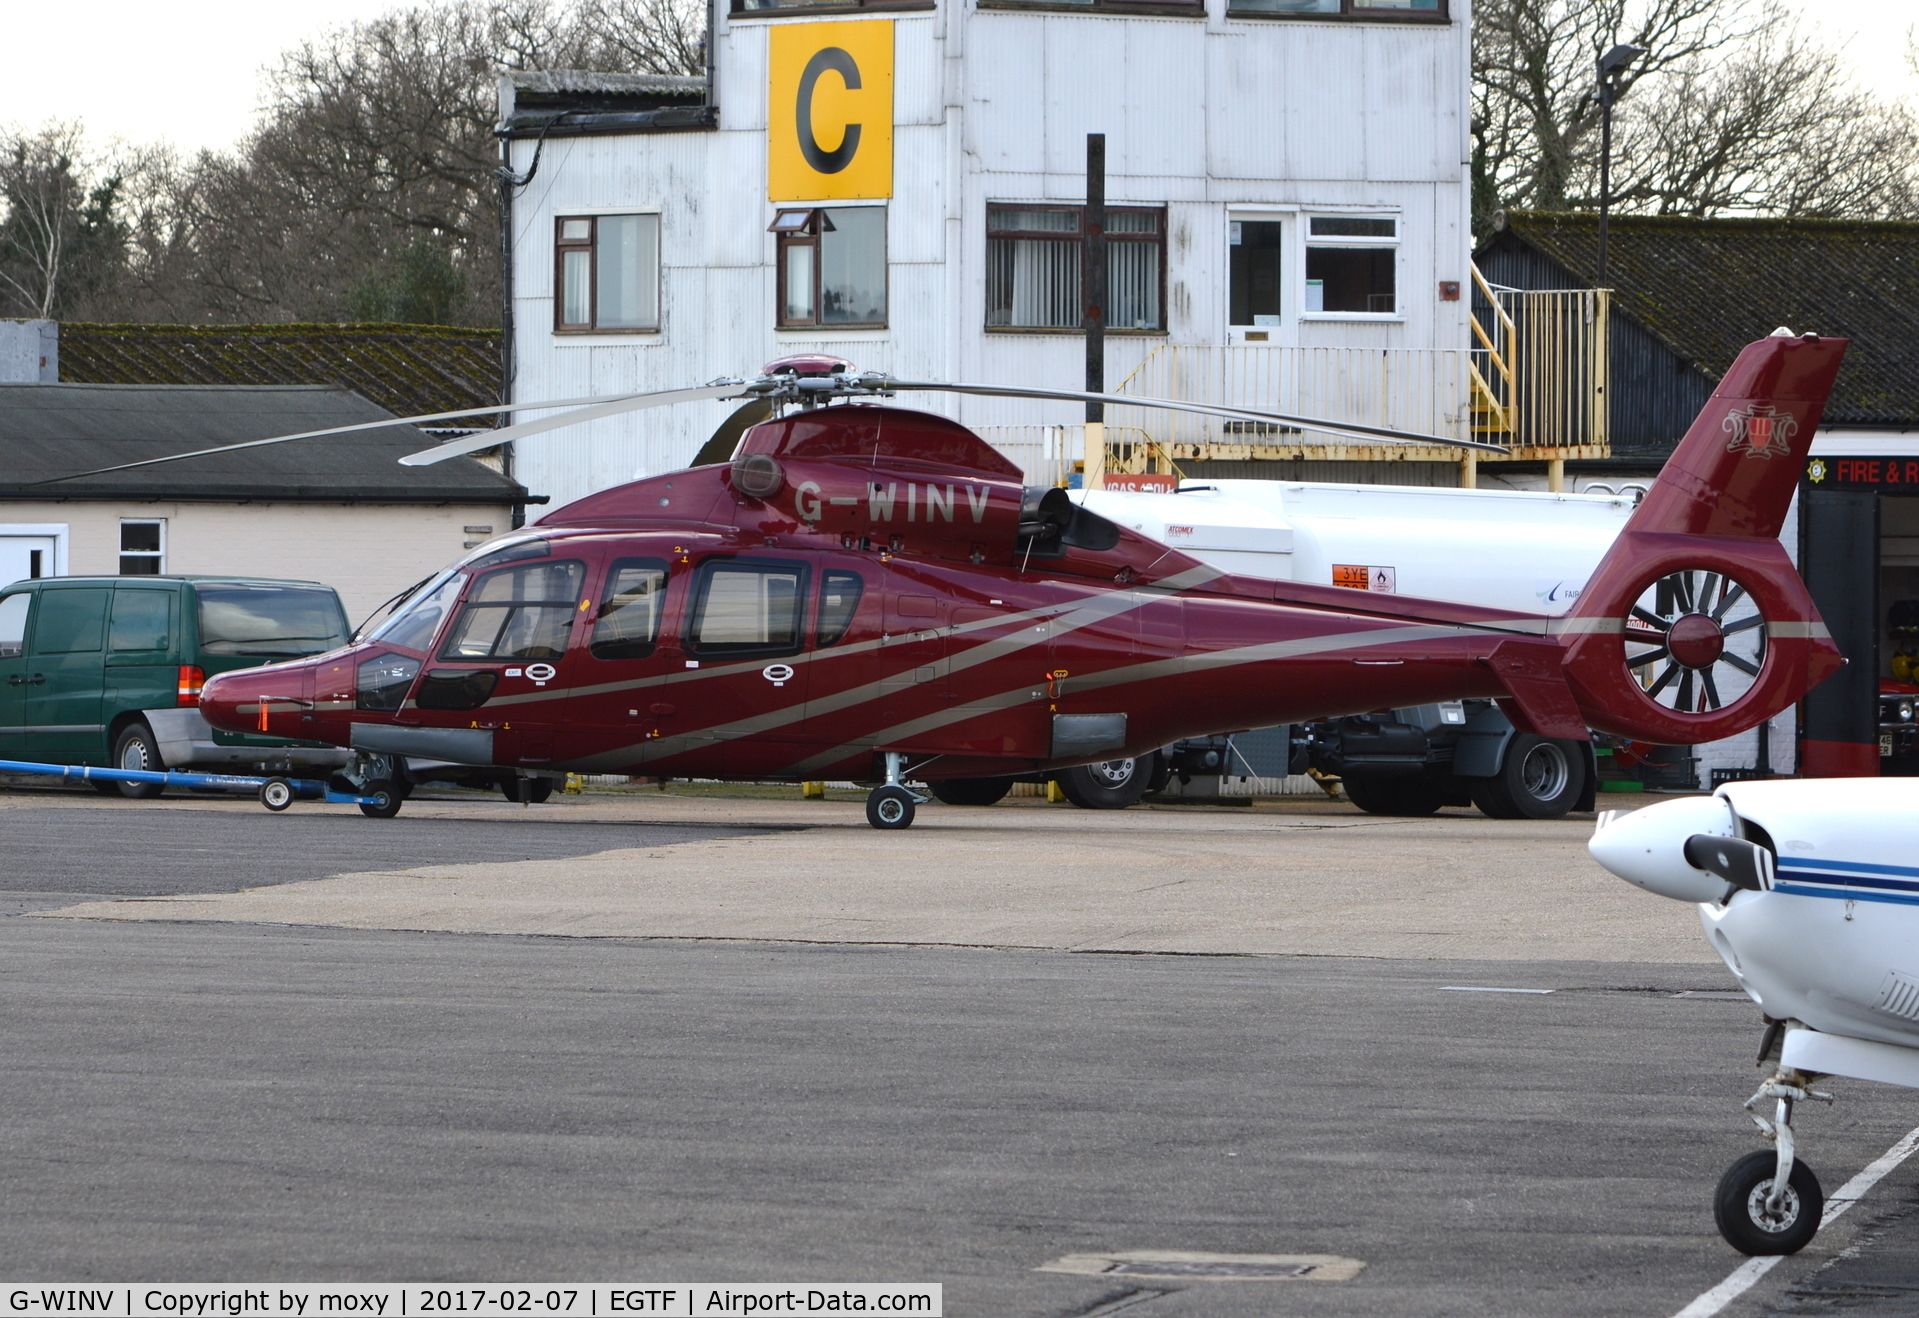 G-WINV, 2006 Eurocopter EC-155B-1 C/N 6748, Eurocopter EC-155B-1 at Fairoaks.